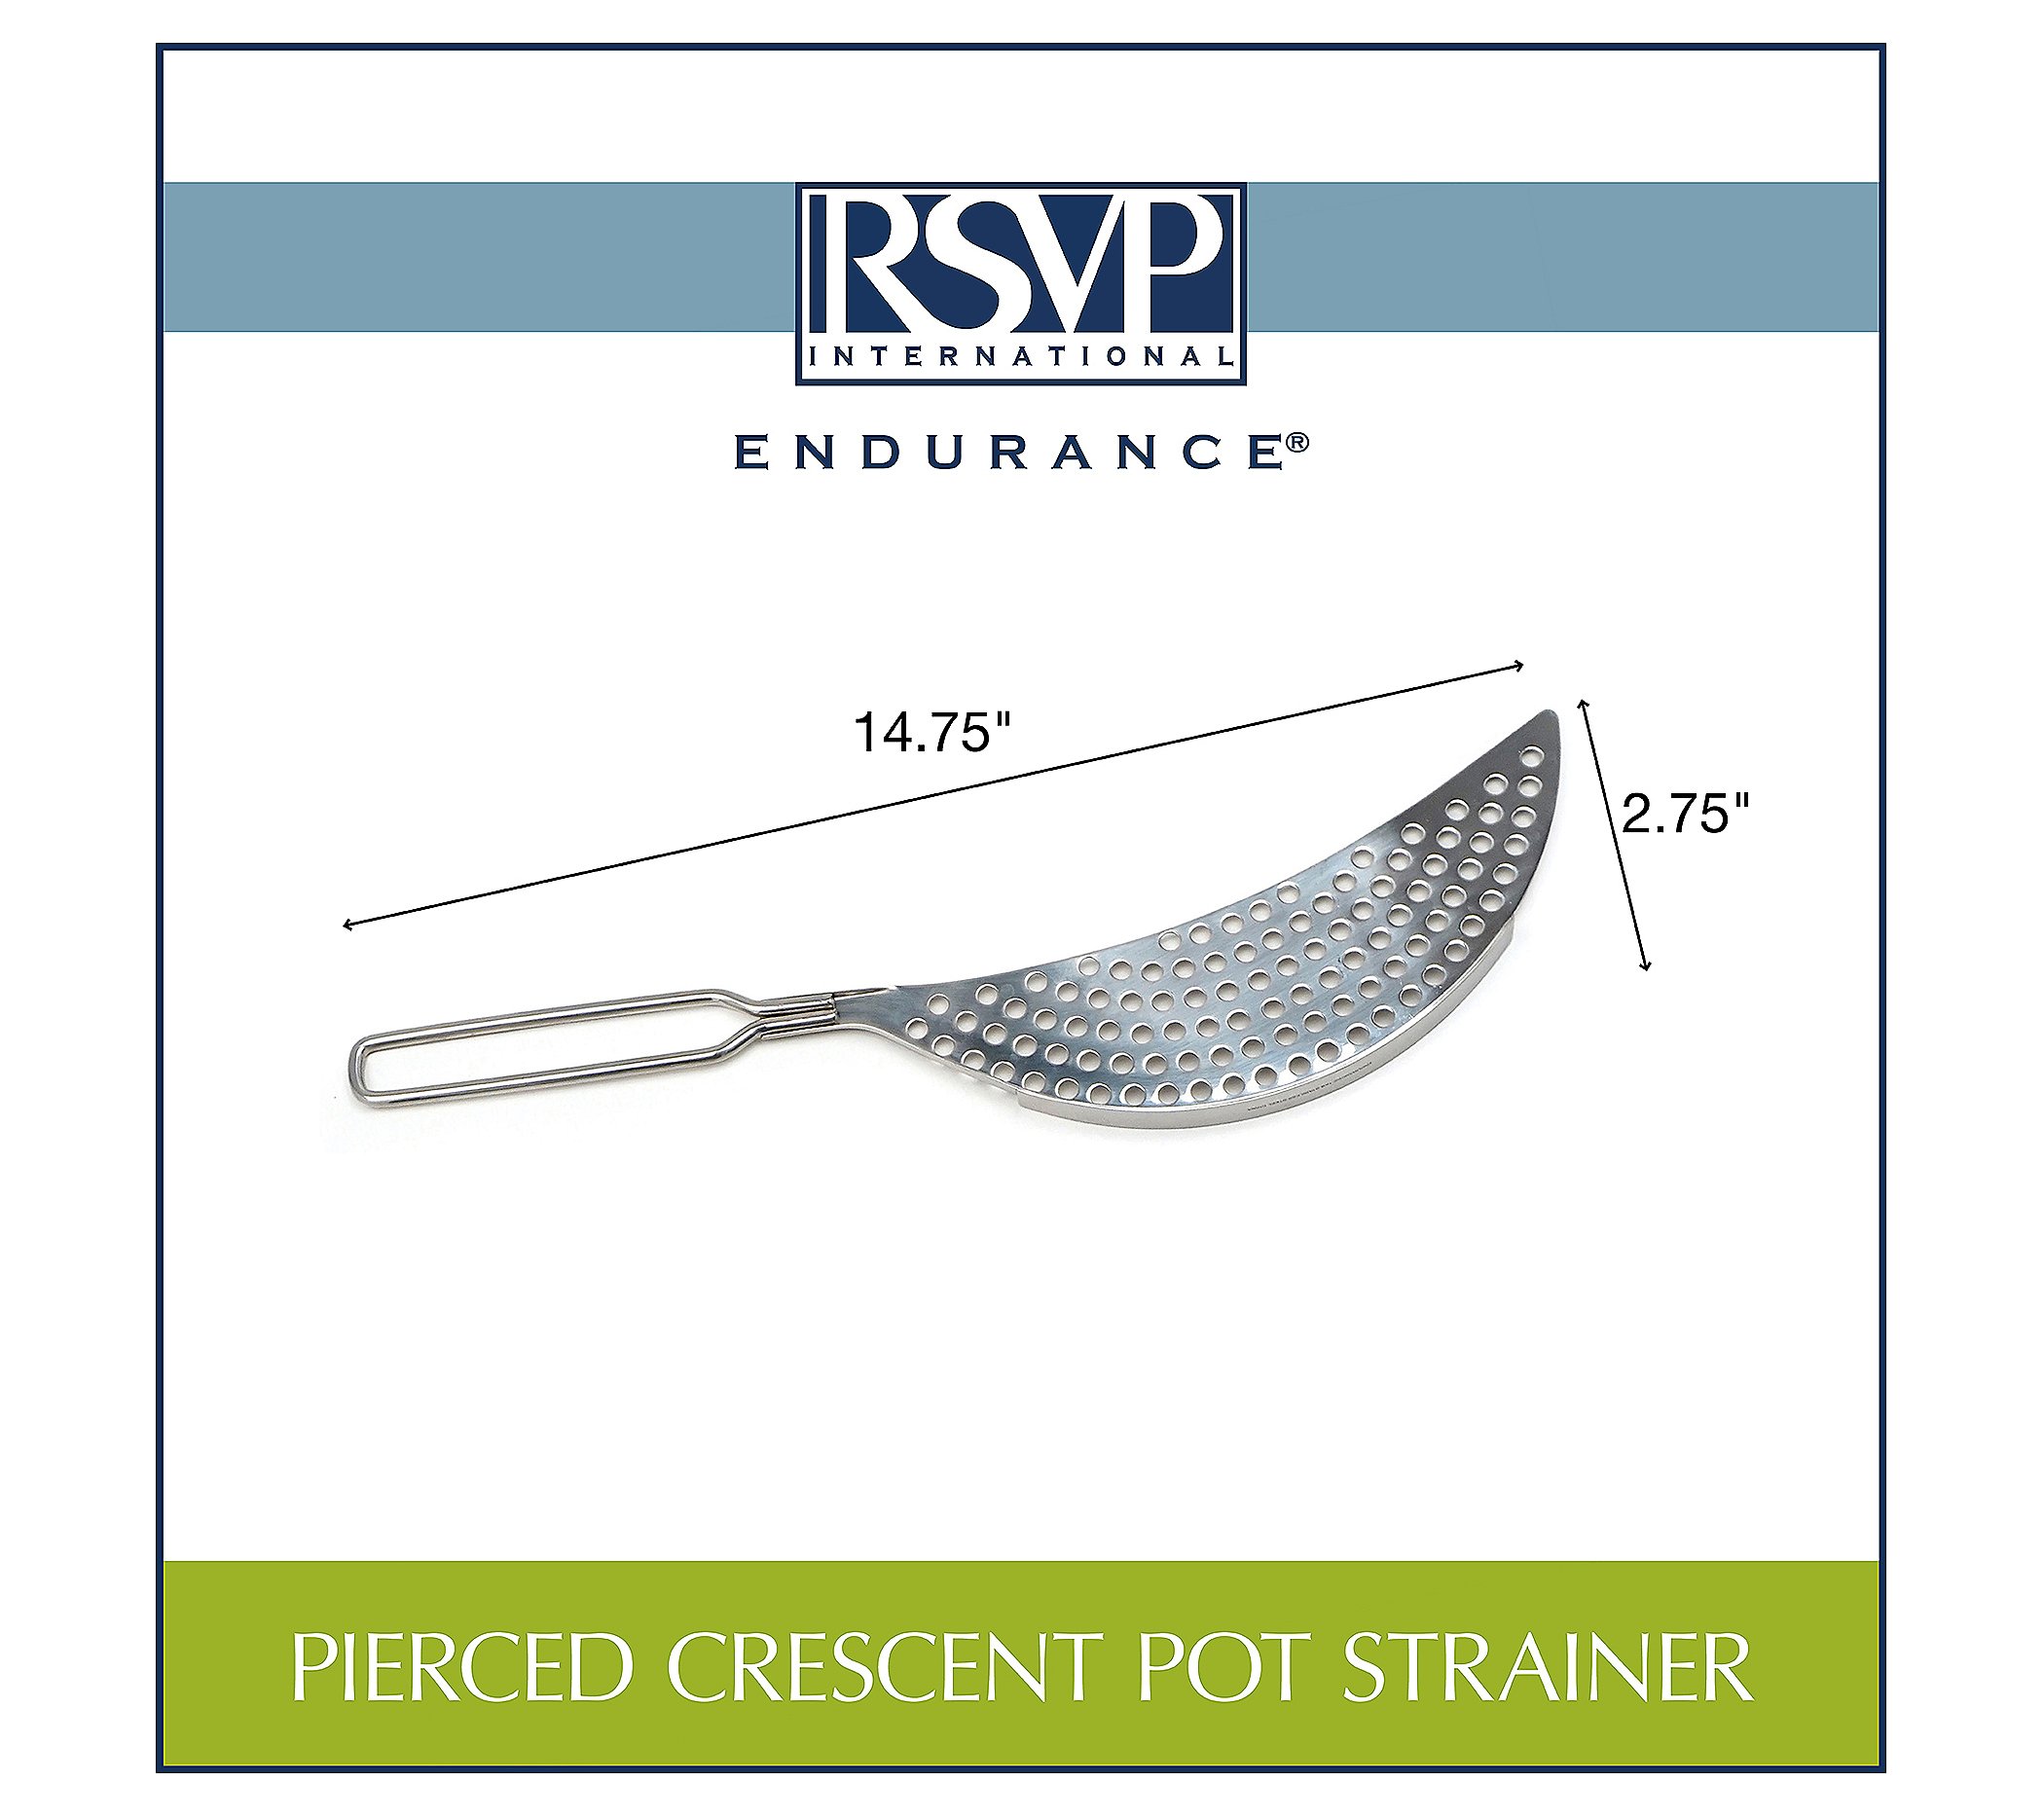 RSVP Endurance Pierced Crescent Pot Strainer